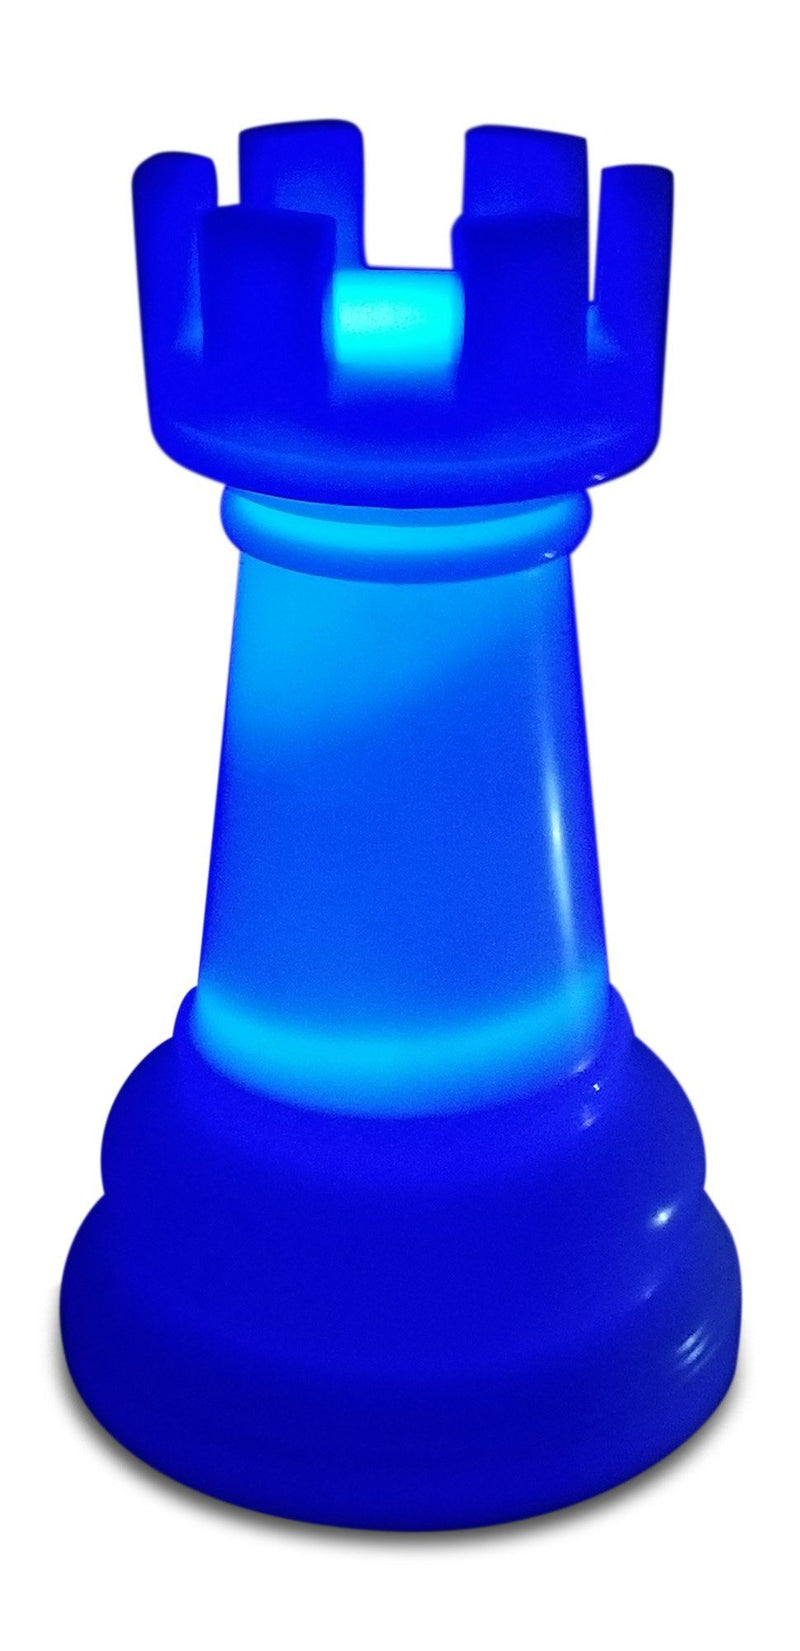 MegaChess 23 Inch Perfect Rook Light-Up Giant Chess Piece - Blue |  | MegaChess.com